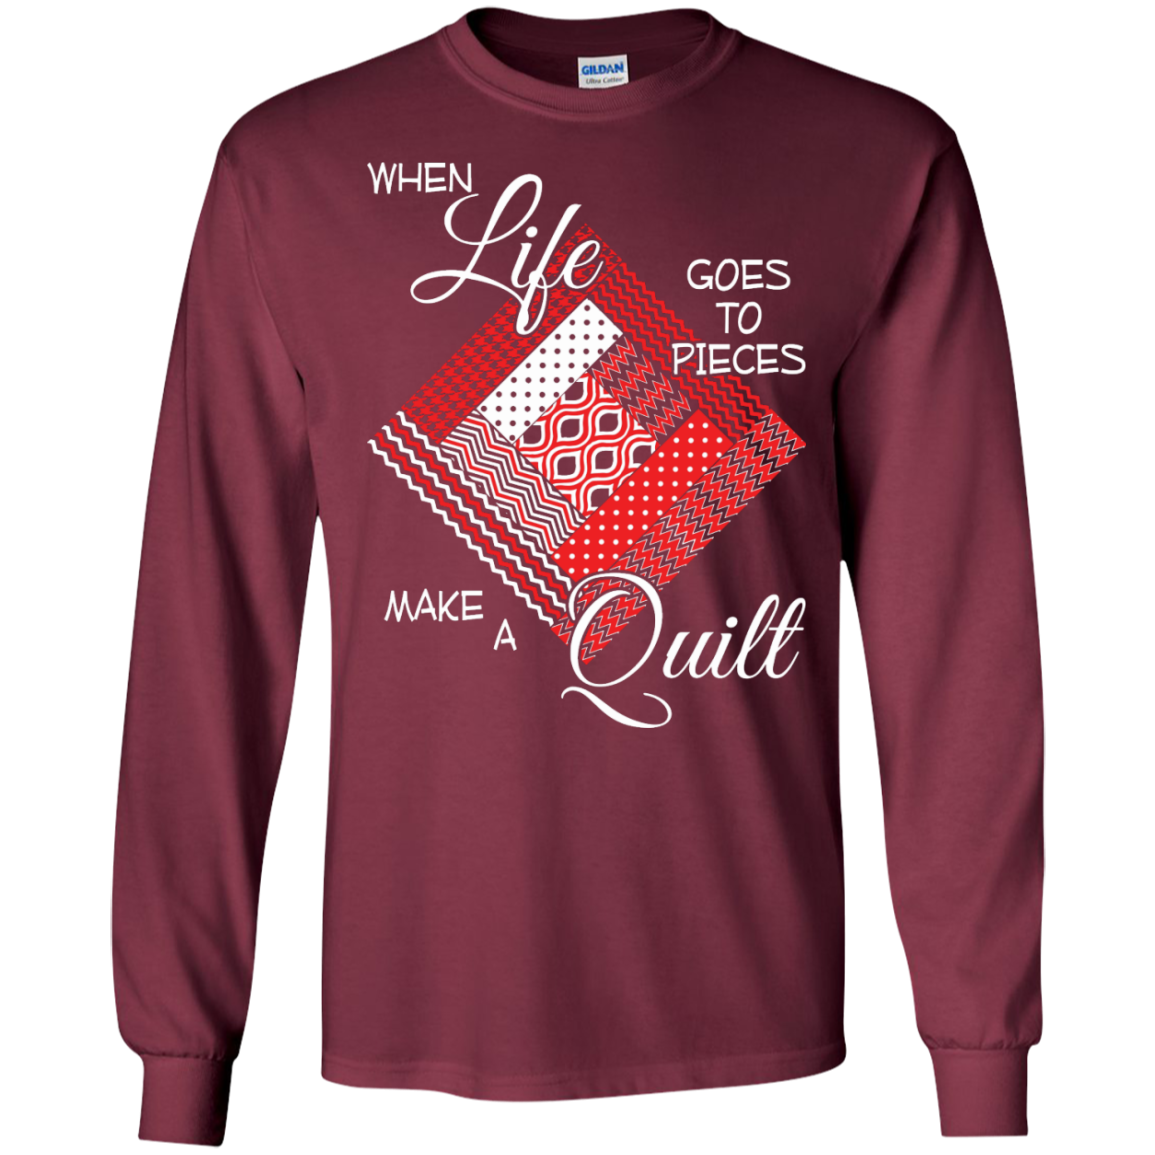 Make a Quilt (red) Long Sleeve Ultra Cotton T-Shirt - Crafter4Life - 5